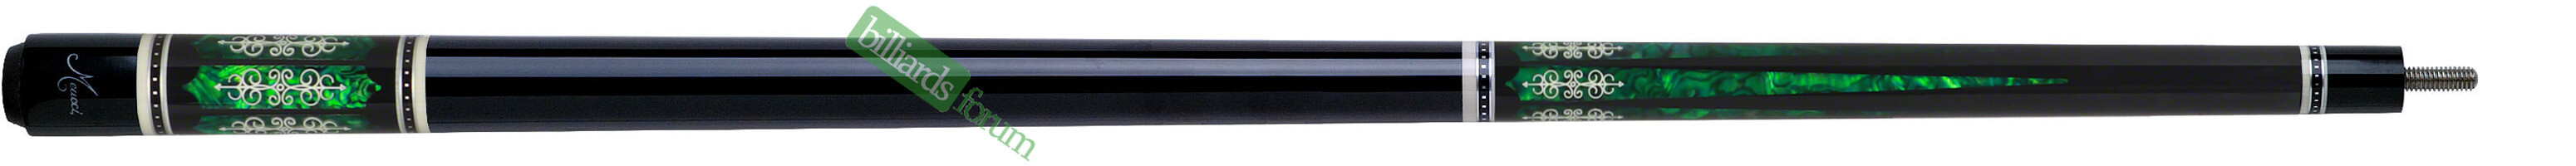 Black Meucci 21st Century Series #3 Cue with Green Paua Shell Inlay, Model 21-3C-G